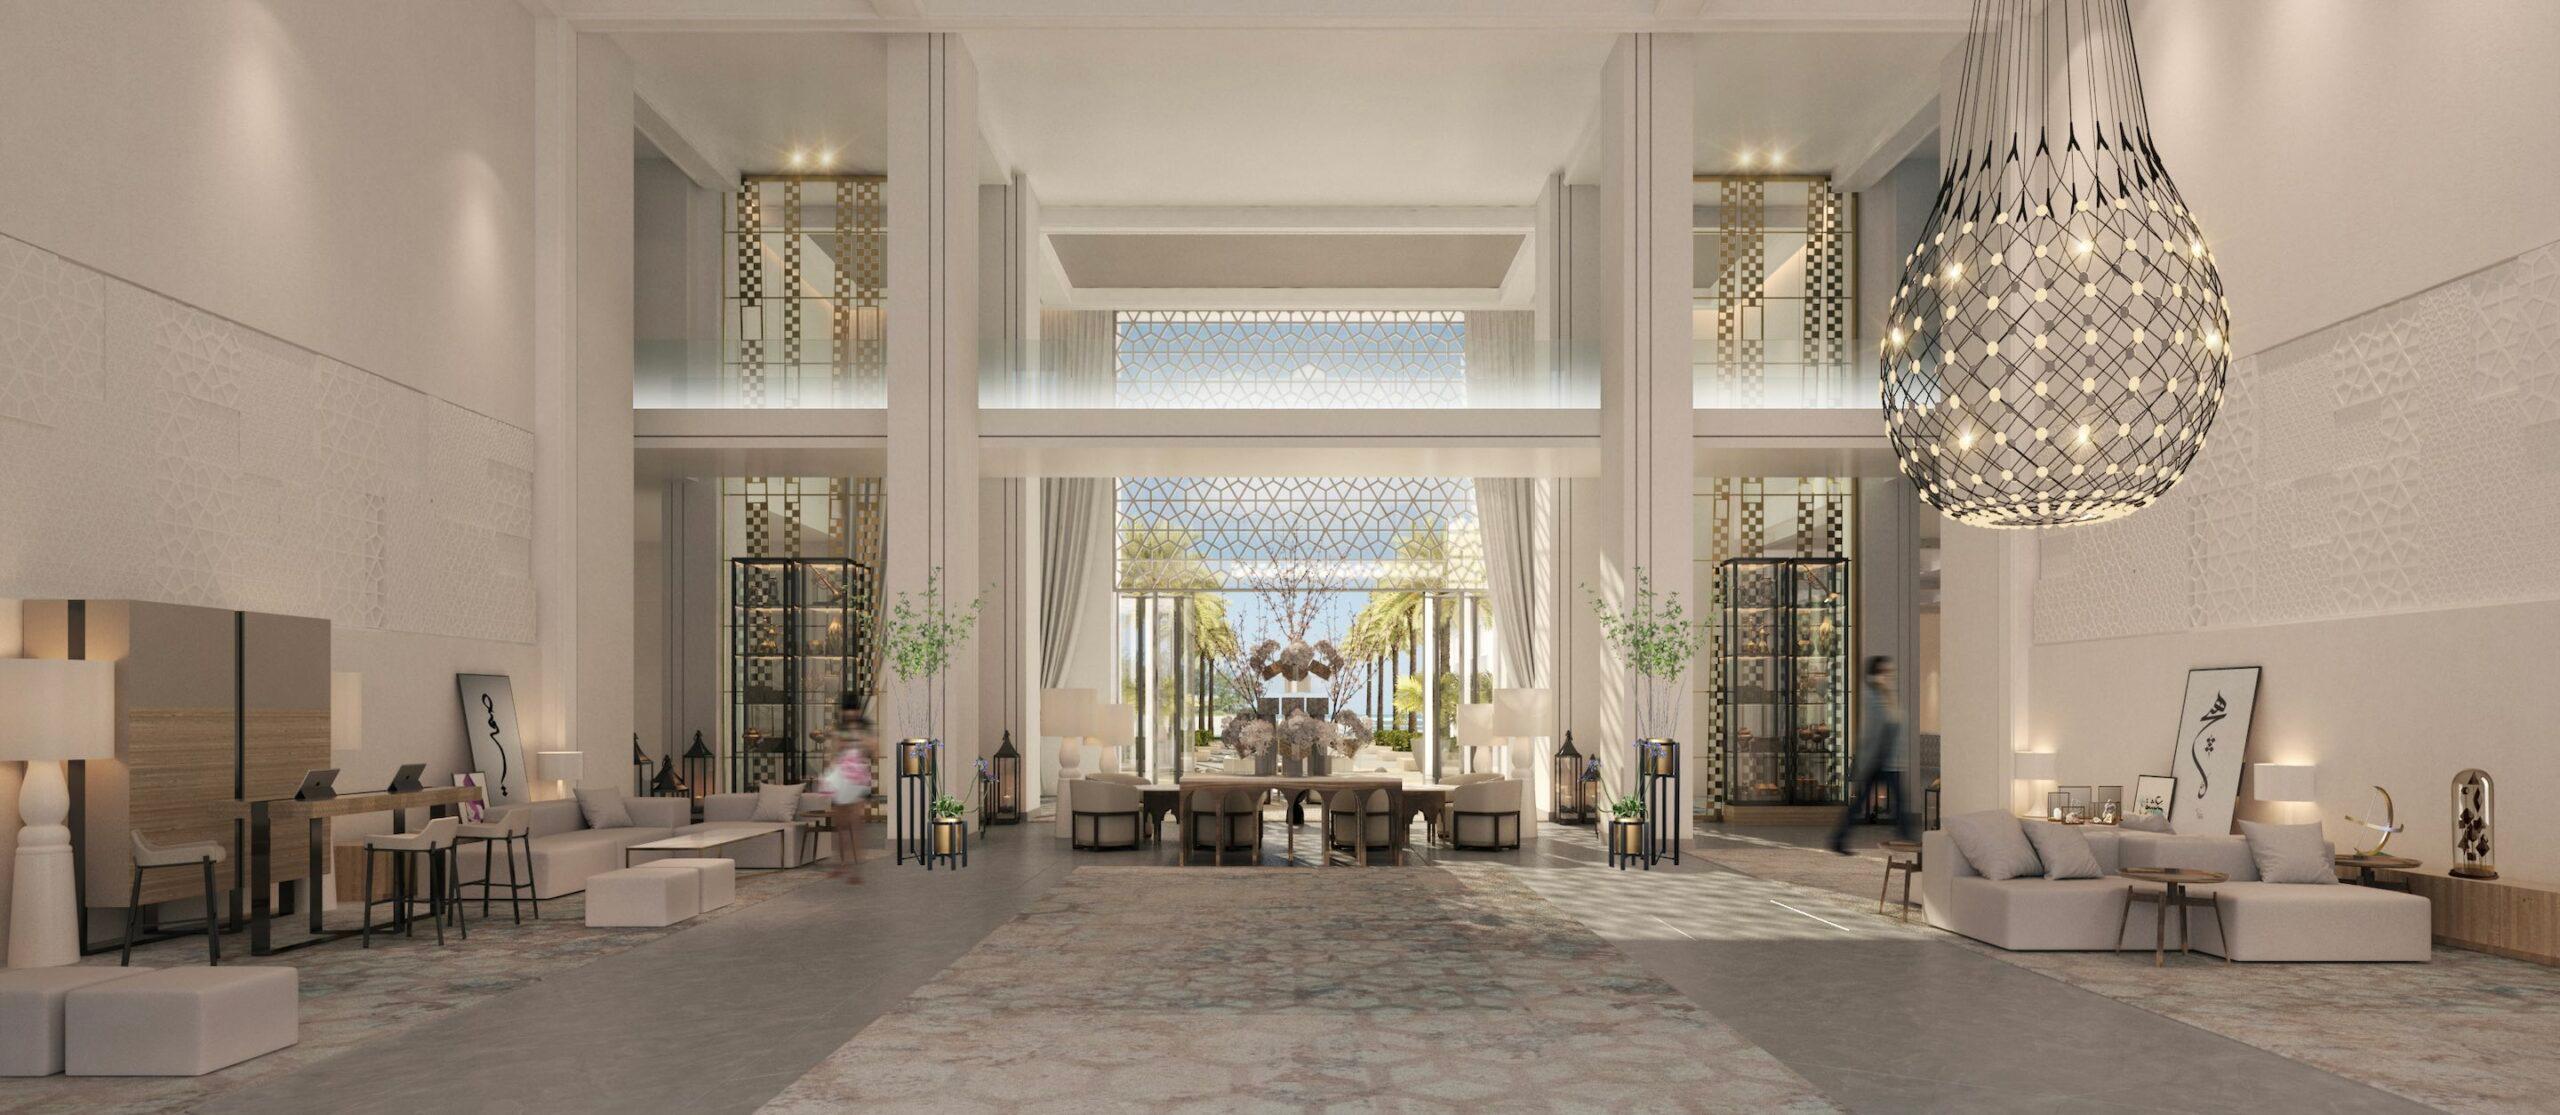 A palatial beachfront resort will soon open in Fujairah